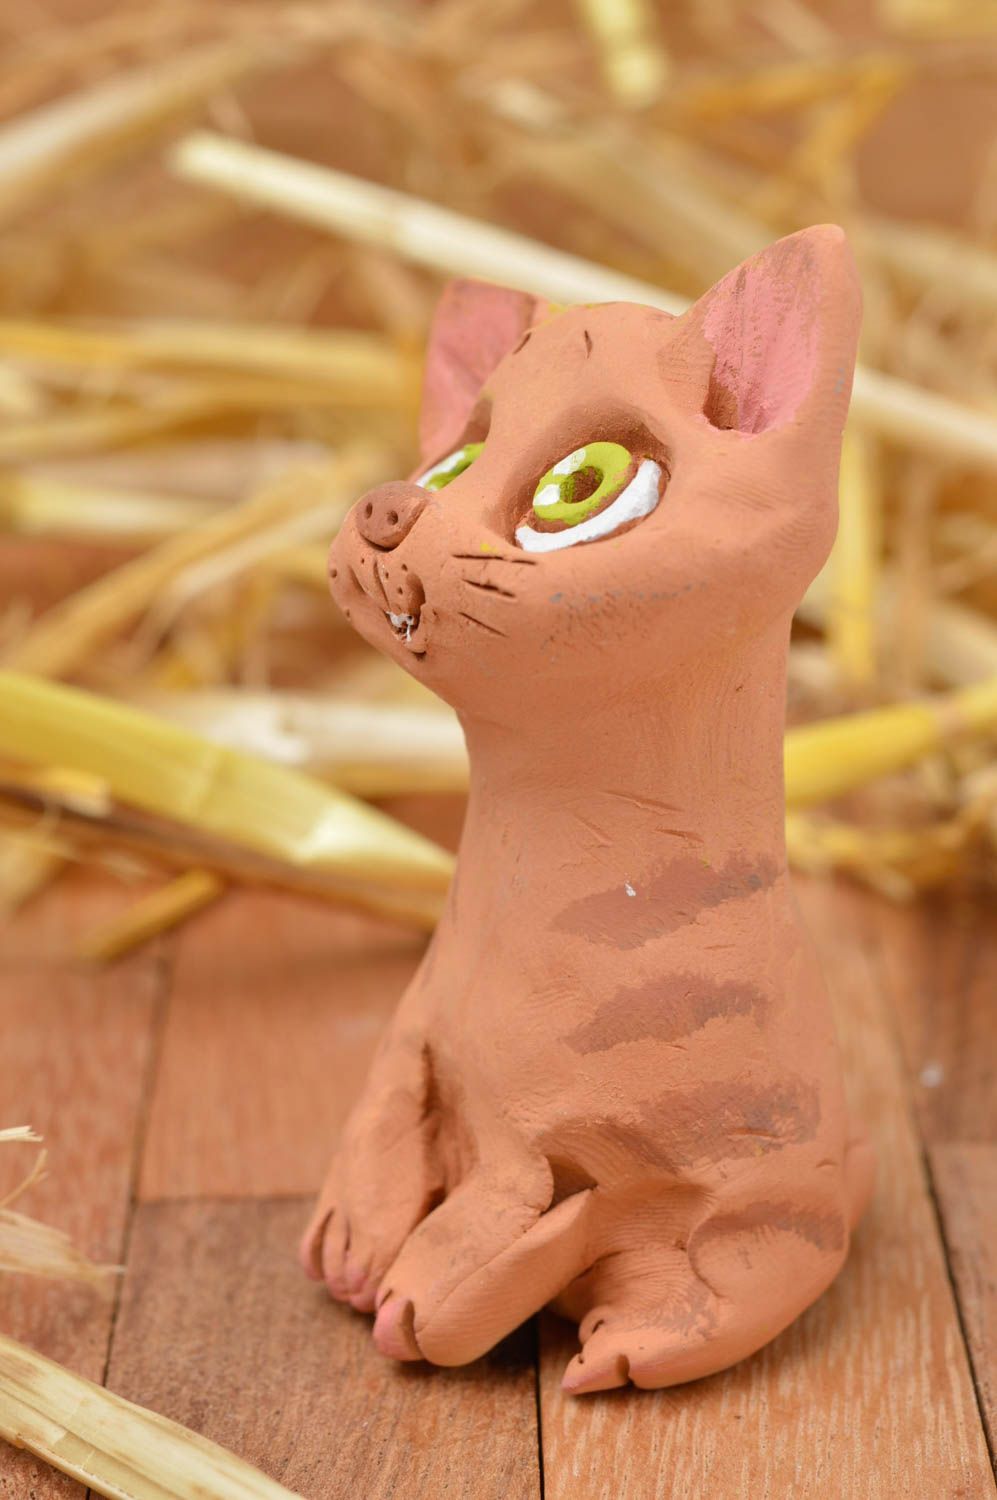 Figura de animal en miniatura hecha a mano elemento decorativo souvenir original foto 1